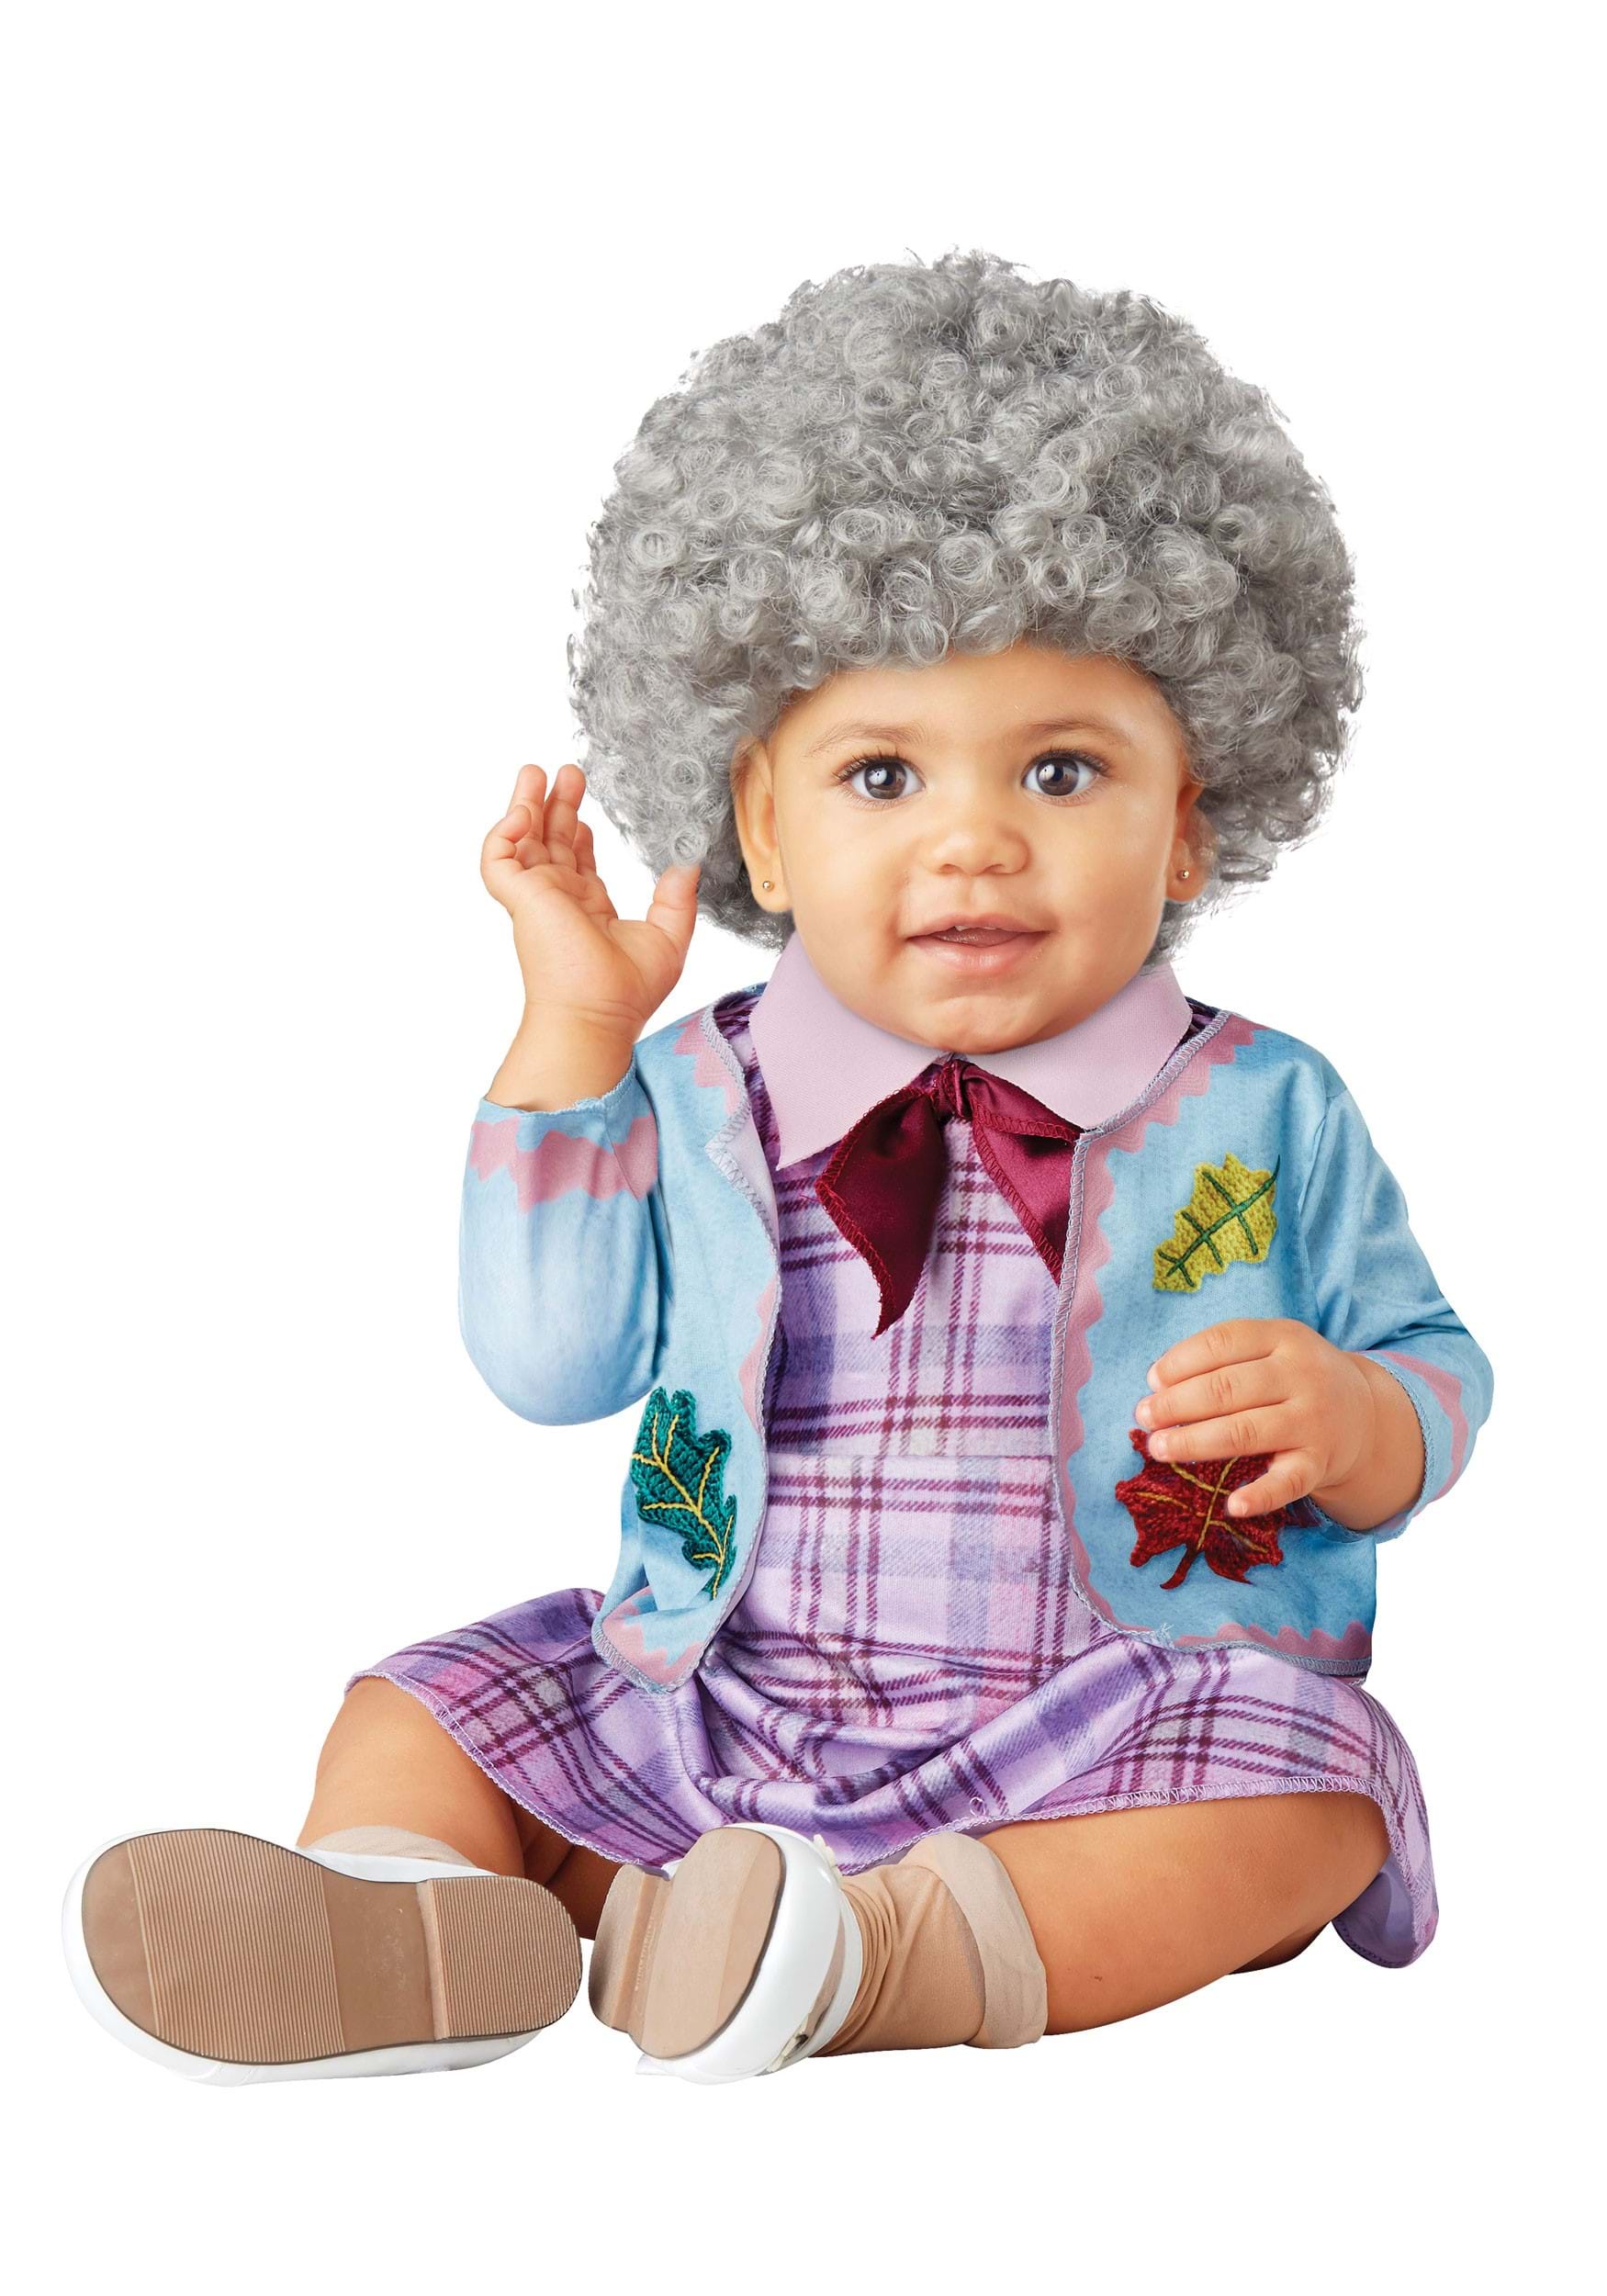 9.) Great Grandma Infant Costume